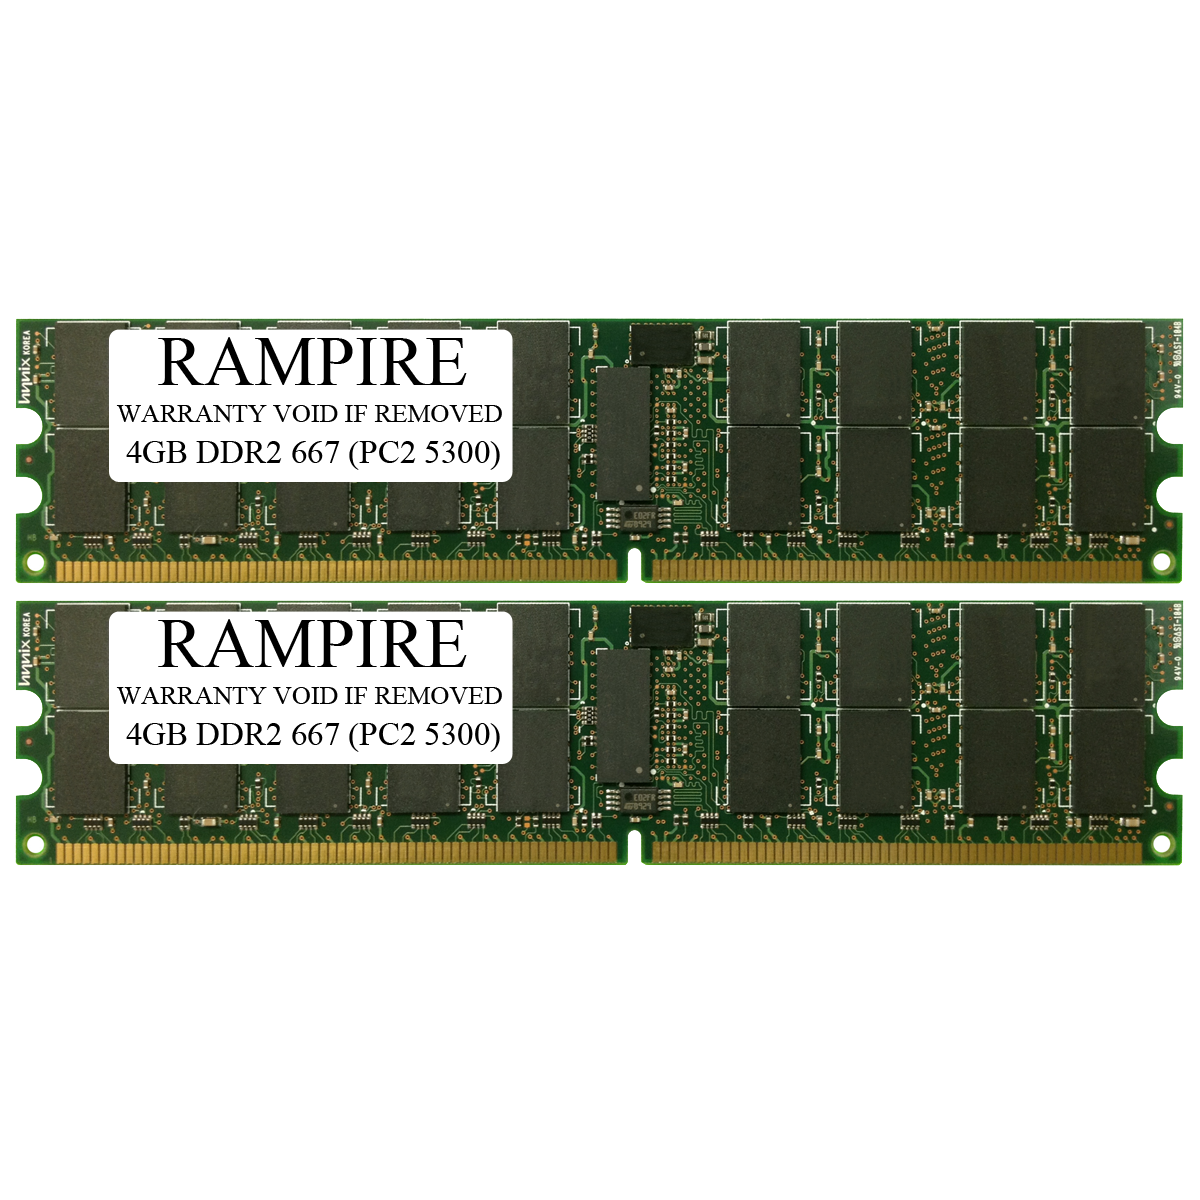 RAMPIRE 8GB (2 x 4GB) DDR2 667 (PC2 5300) 240-Pin SDRAM 1Rx4 Standard Profile 1.8V ECC Registered Server Memory